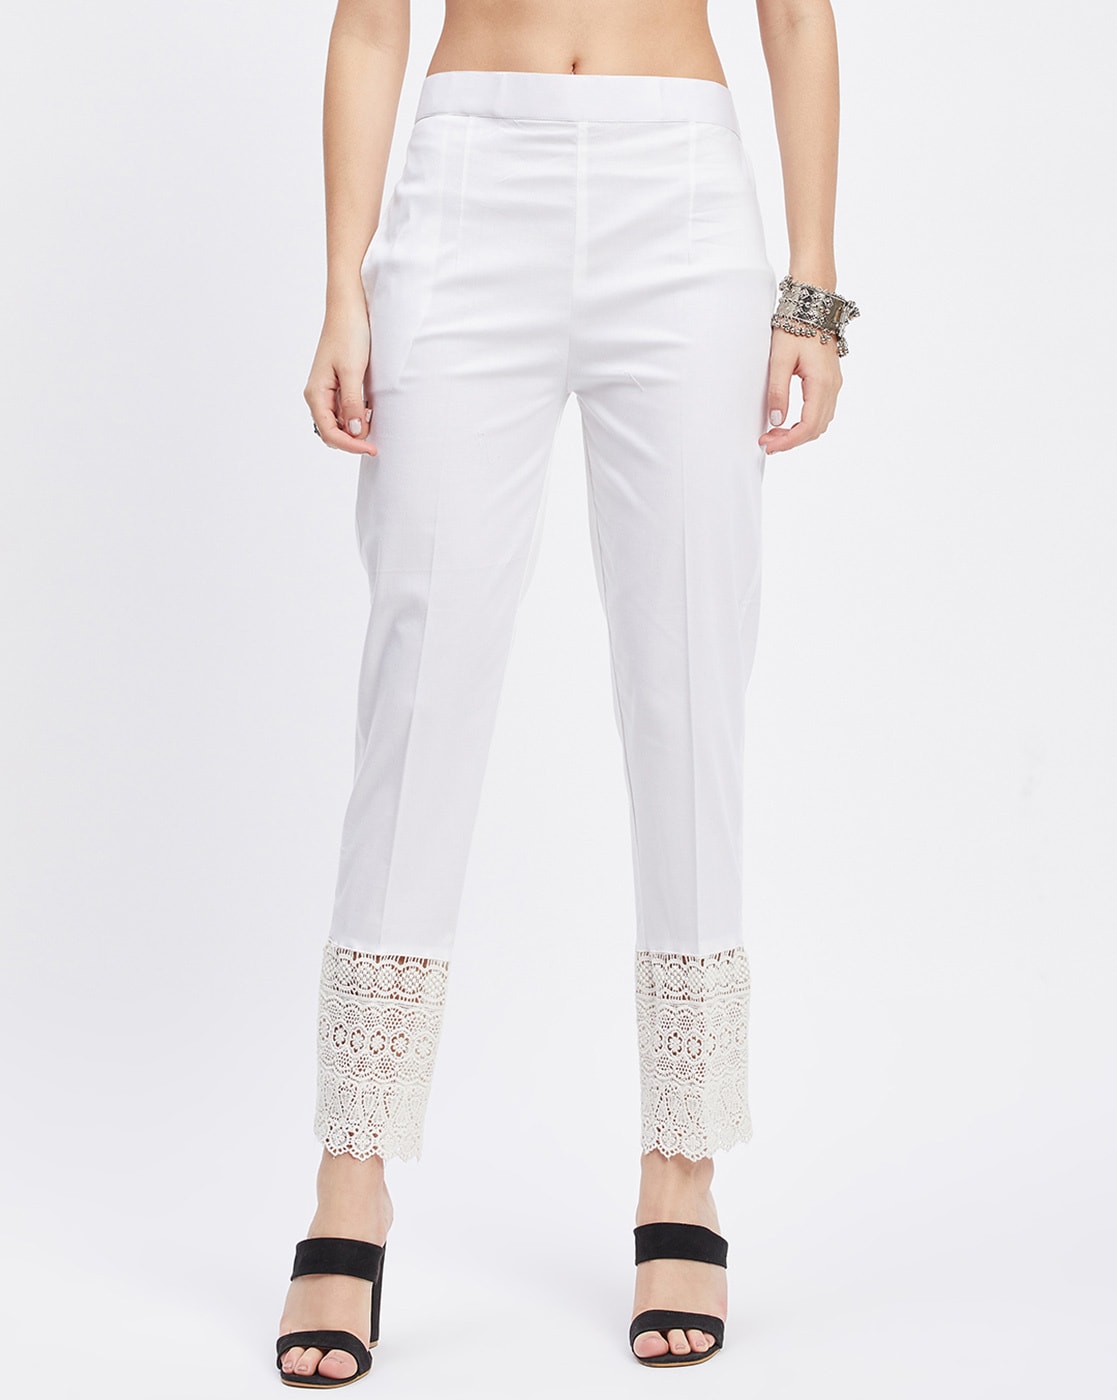 Stylish Blue Denim Shirt and White Pant Fashion for Women